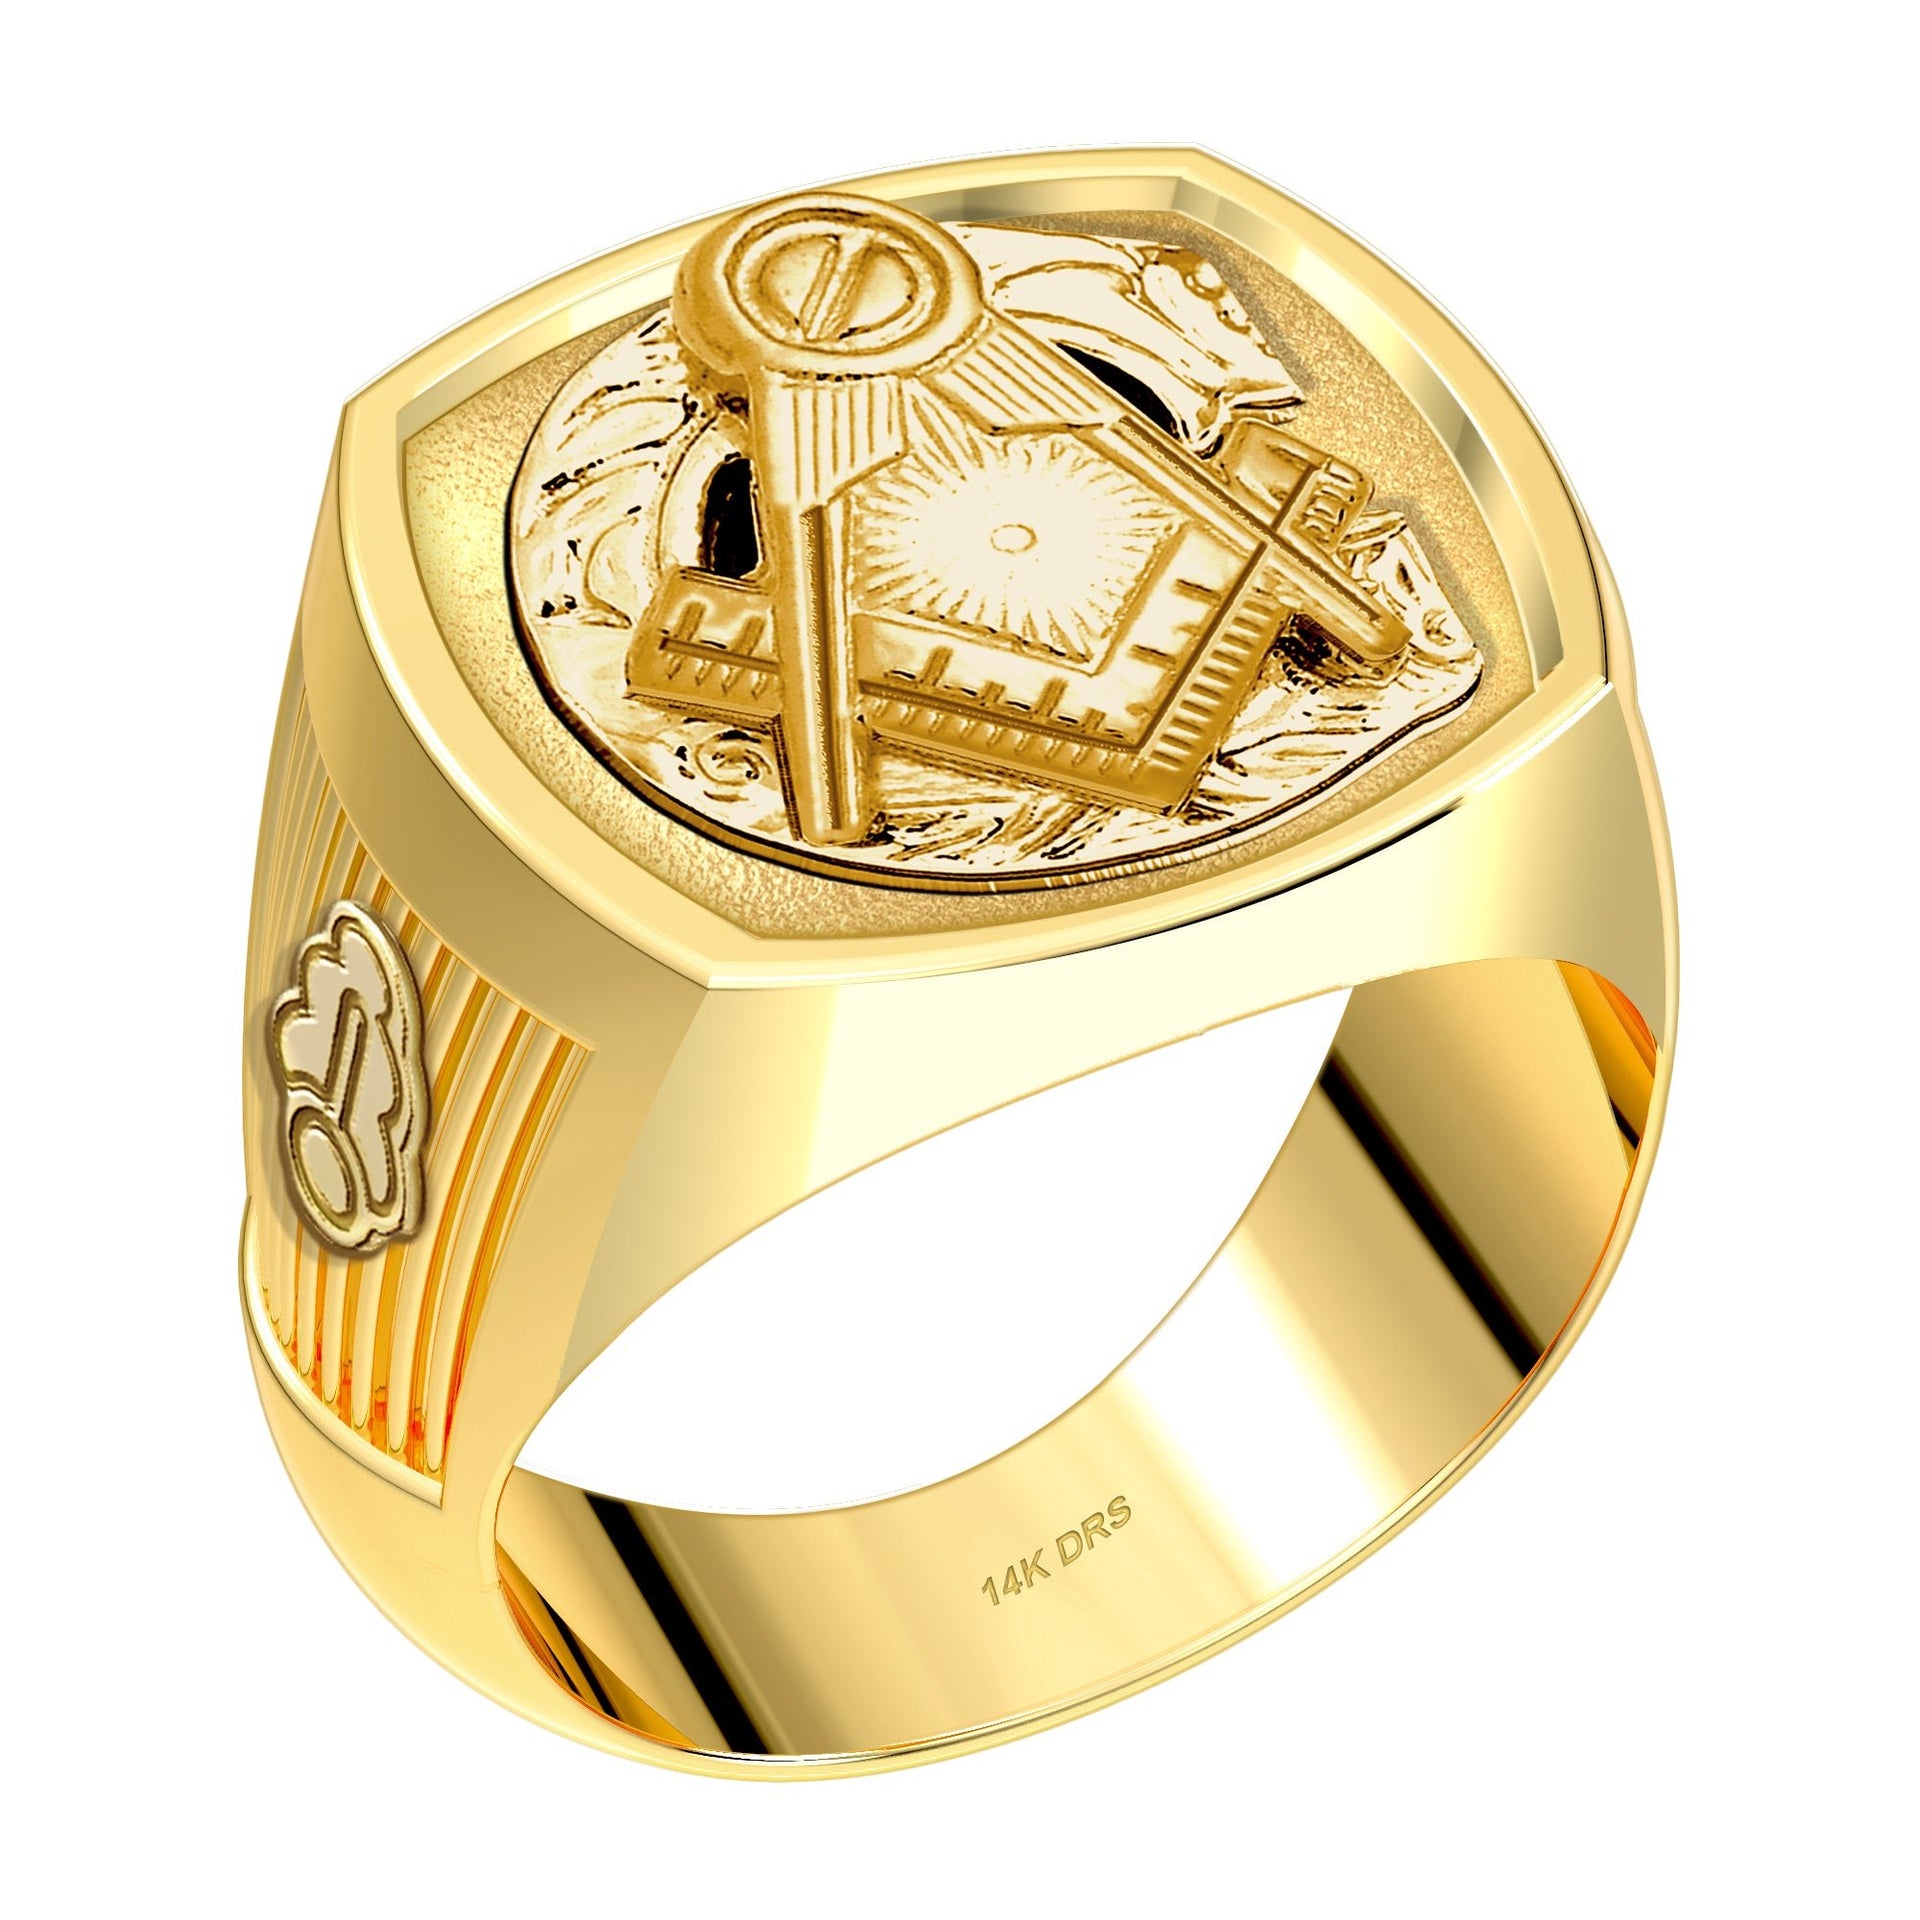 US Jewels Masonic Customizable Men's 10k or 14k Yellow Gold & White Gold Masonic Rings - US Jewels